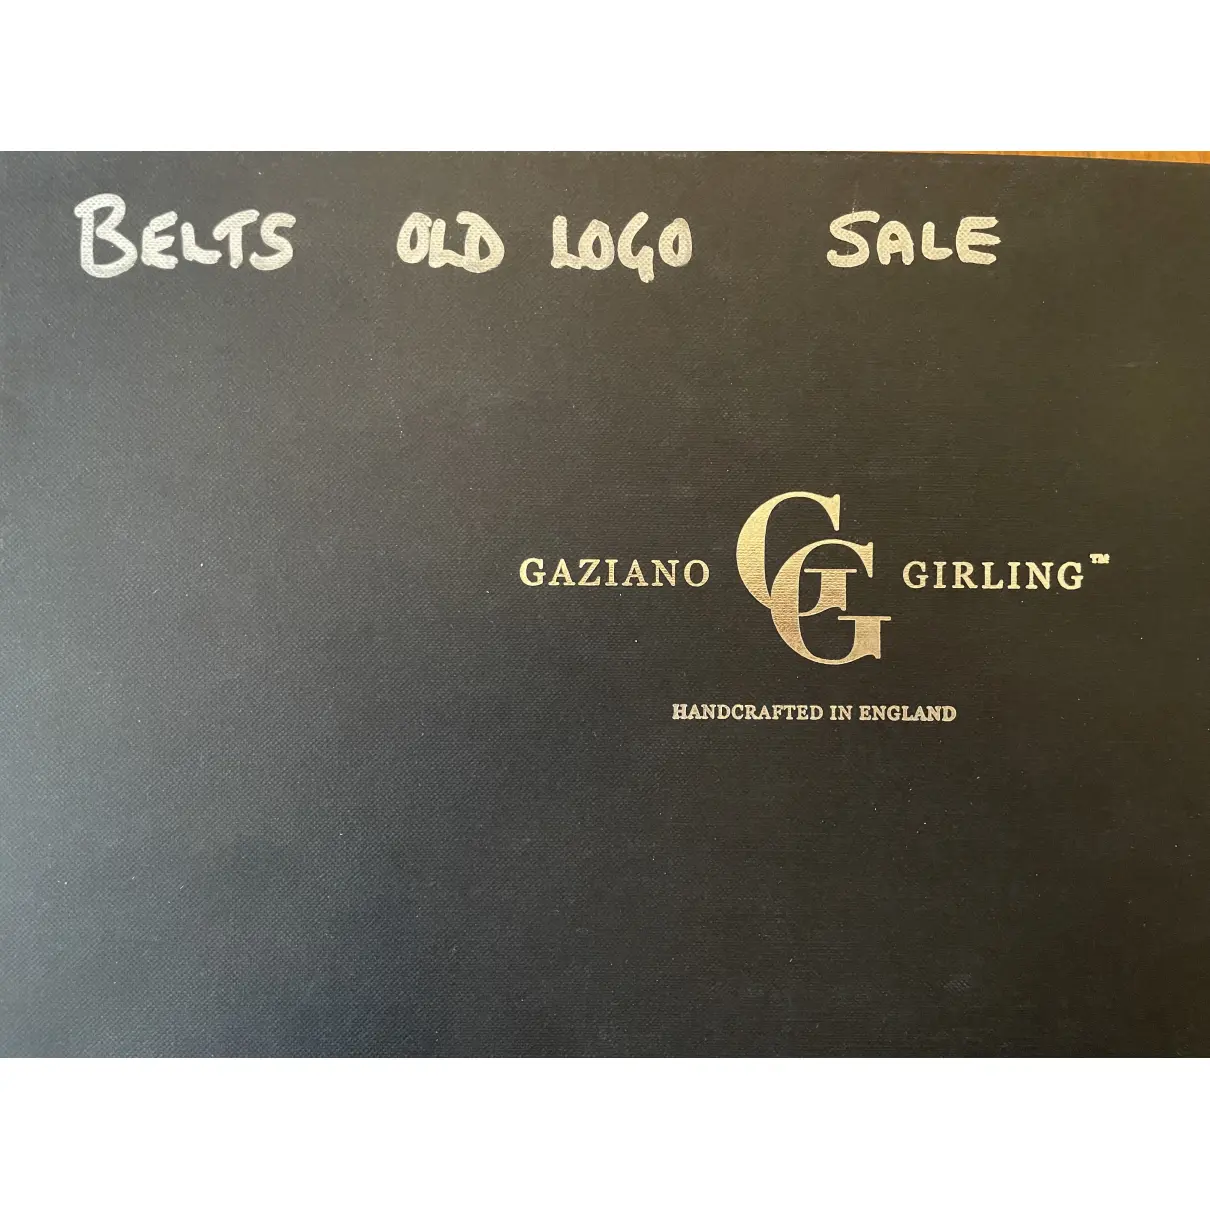 Buy Gaziano & Girling Boots online